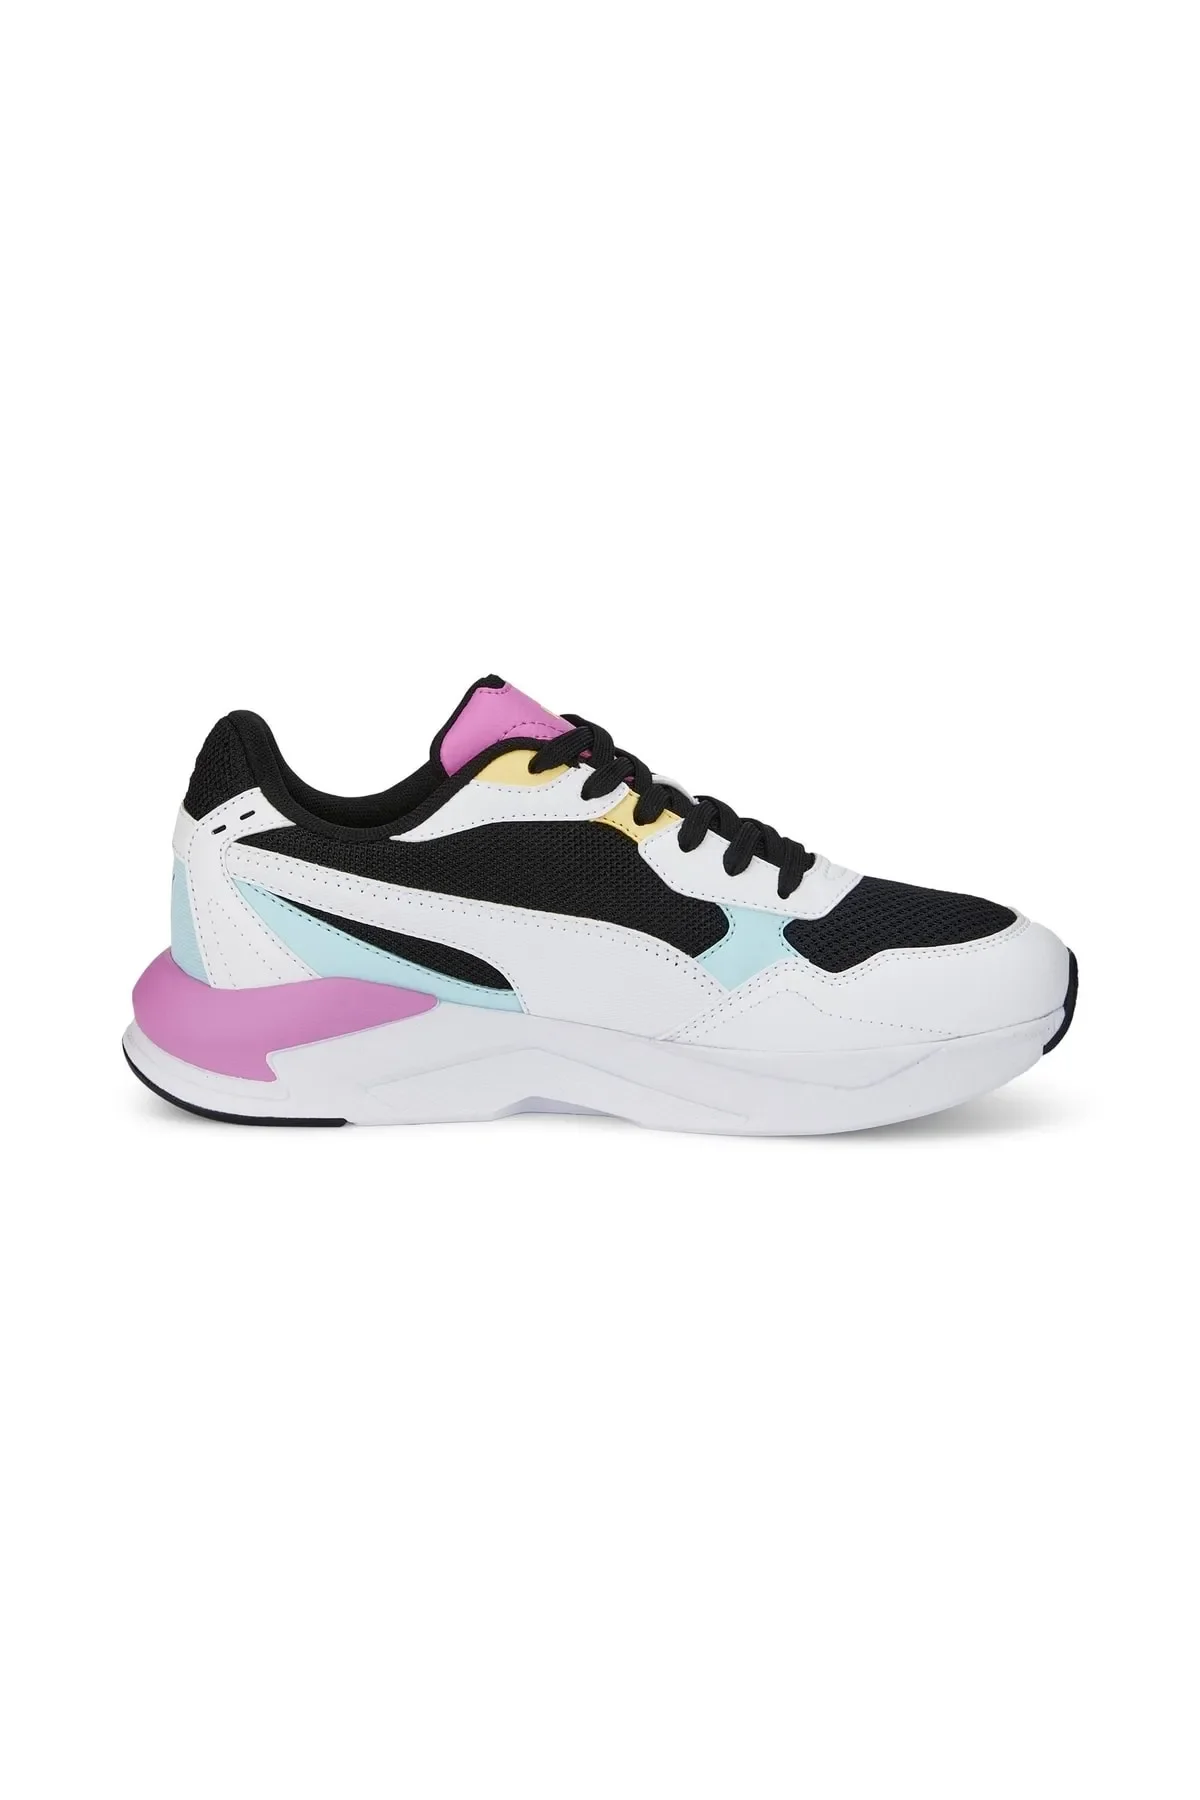 X-Ray Speed Lite - Kadın Sneaker Ayakkabı 384639 -Siyah - 8